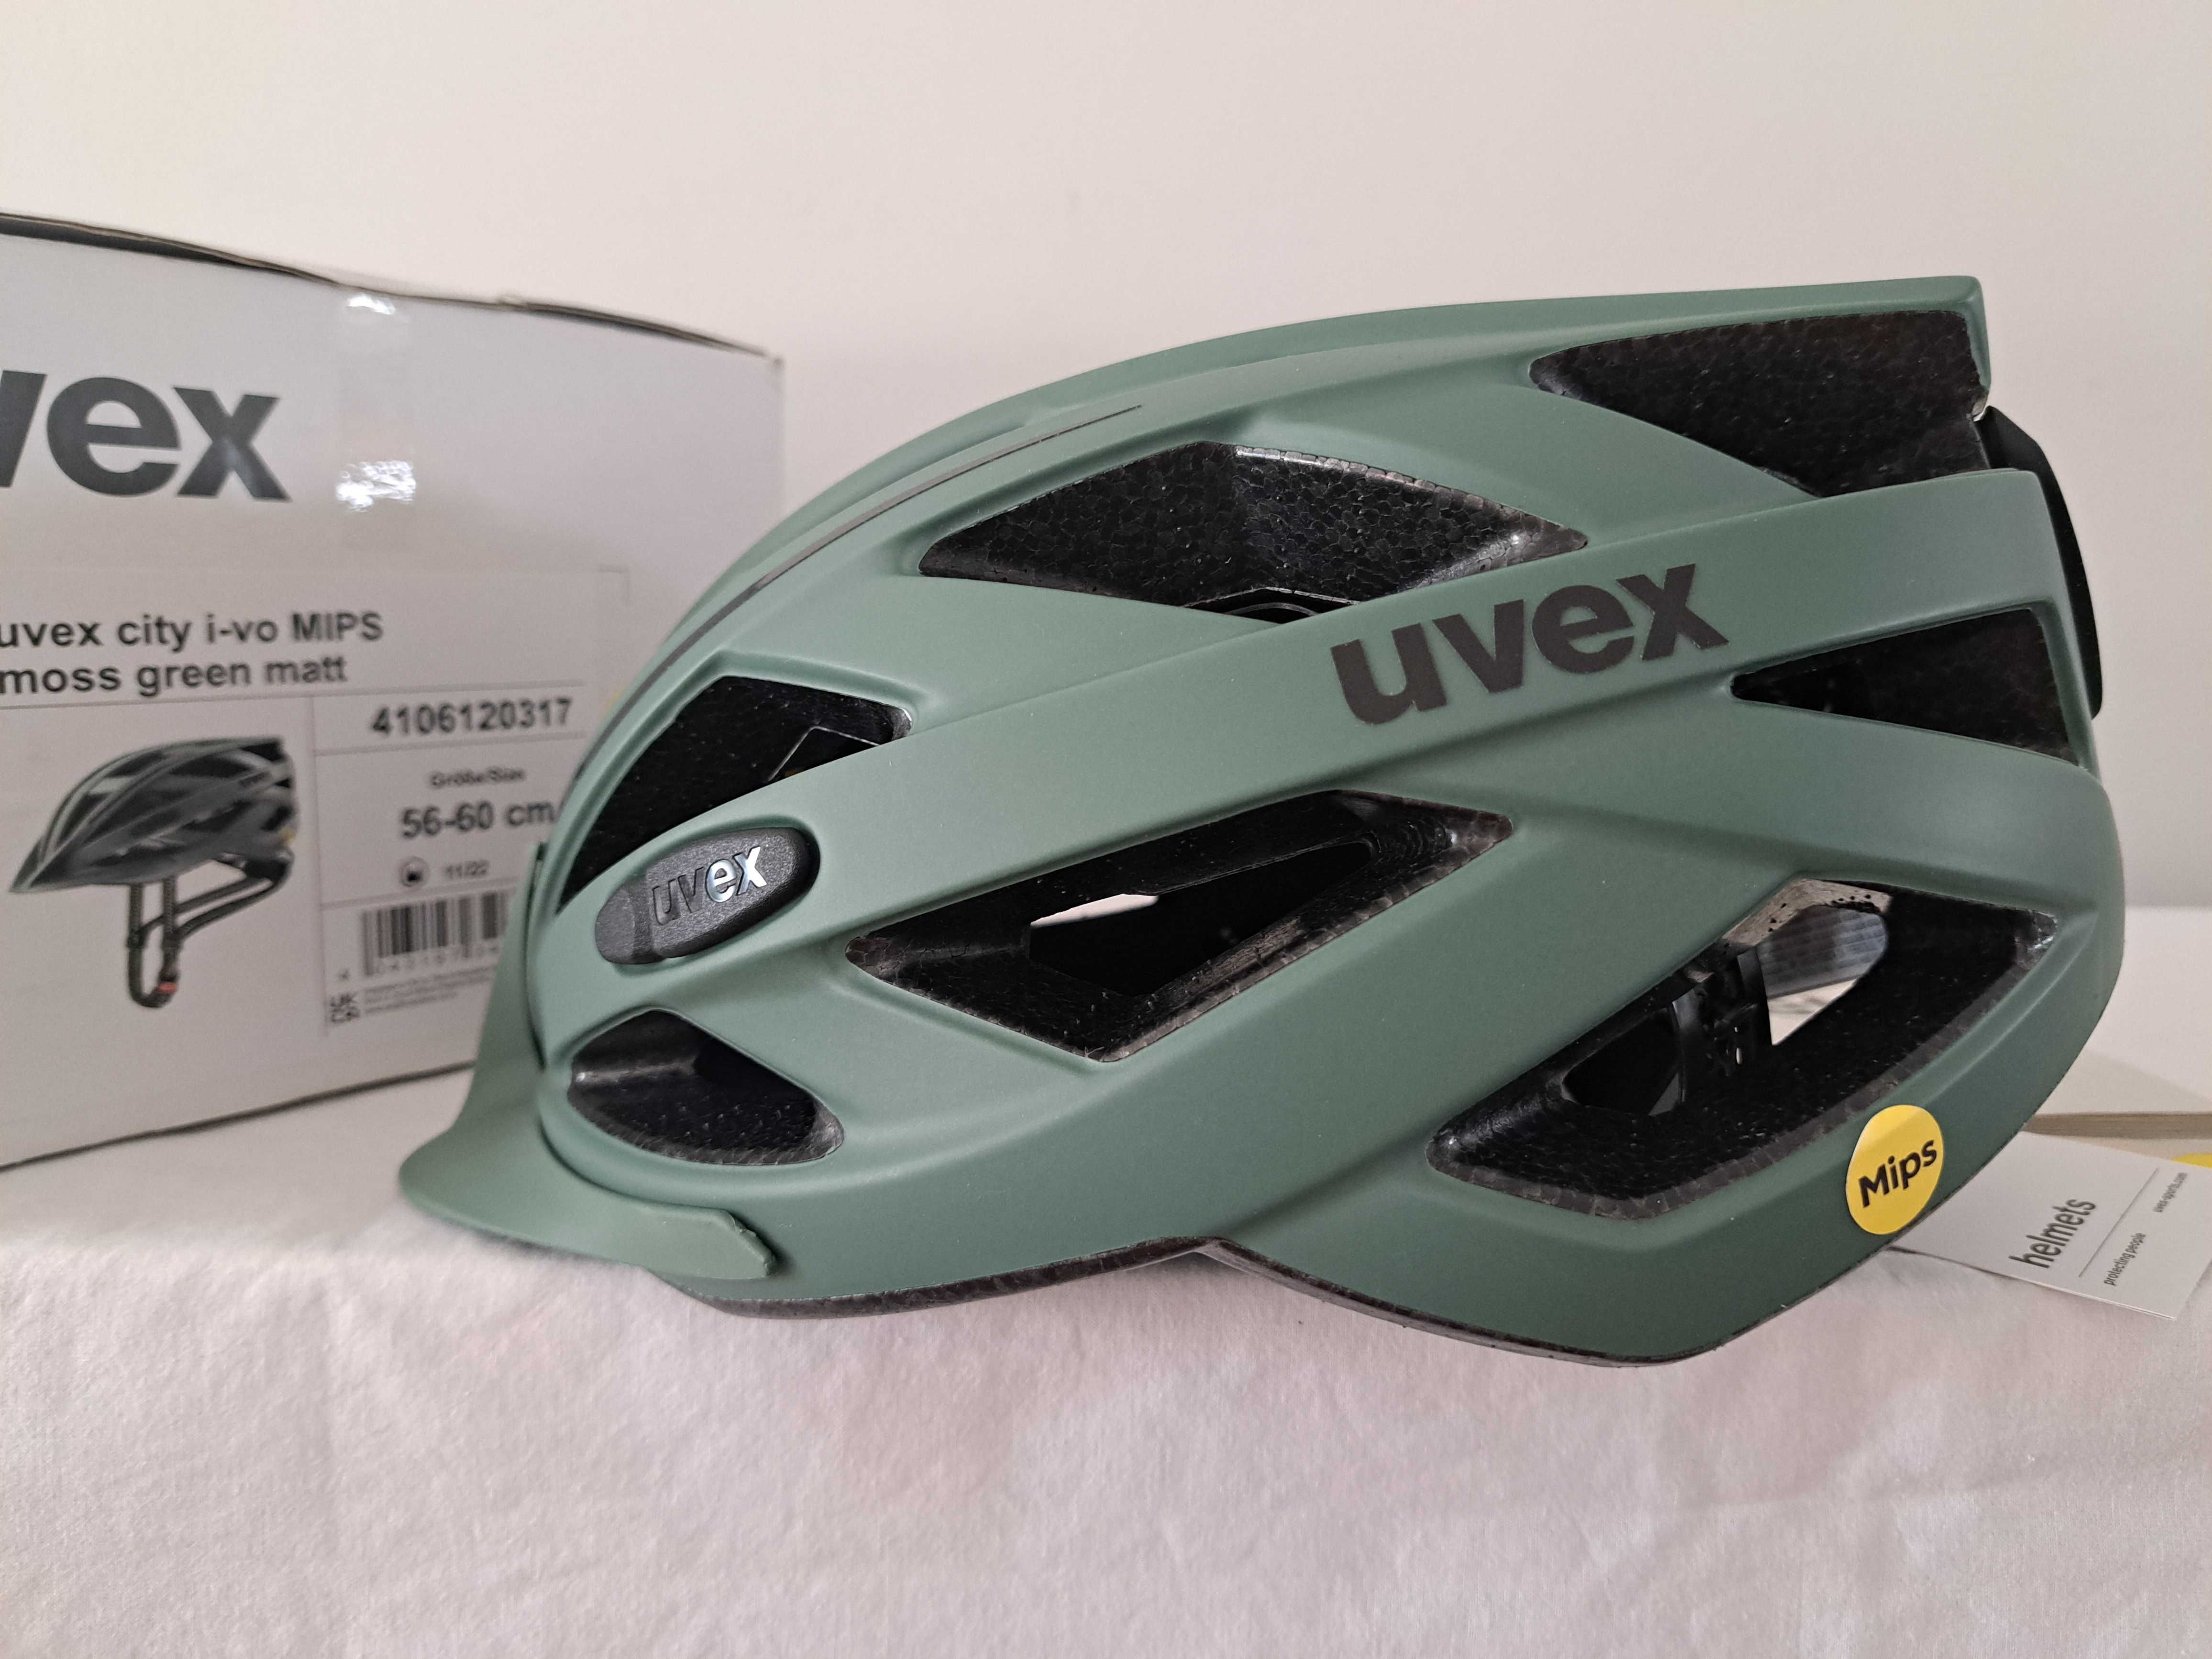 Kask rowerowy Uvex City I-vo MIPS Moss Green Matt L 56-60cm